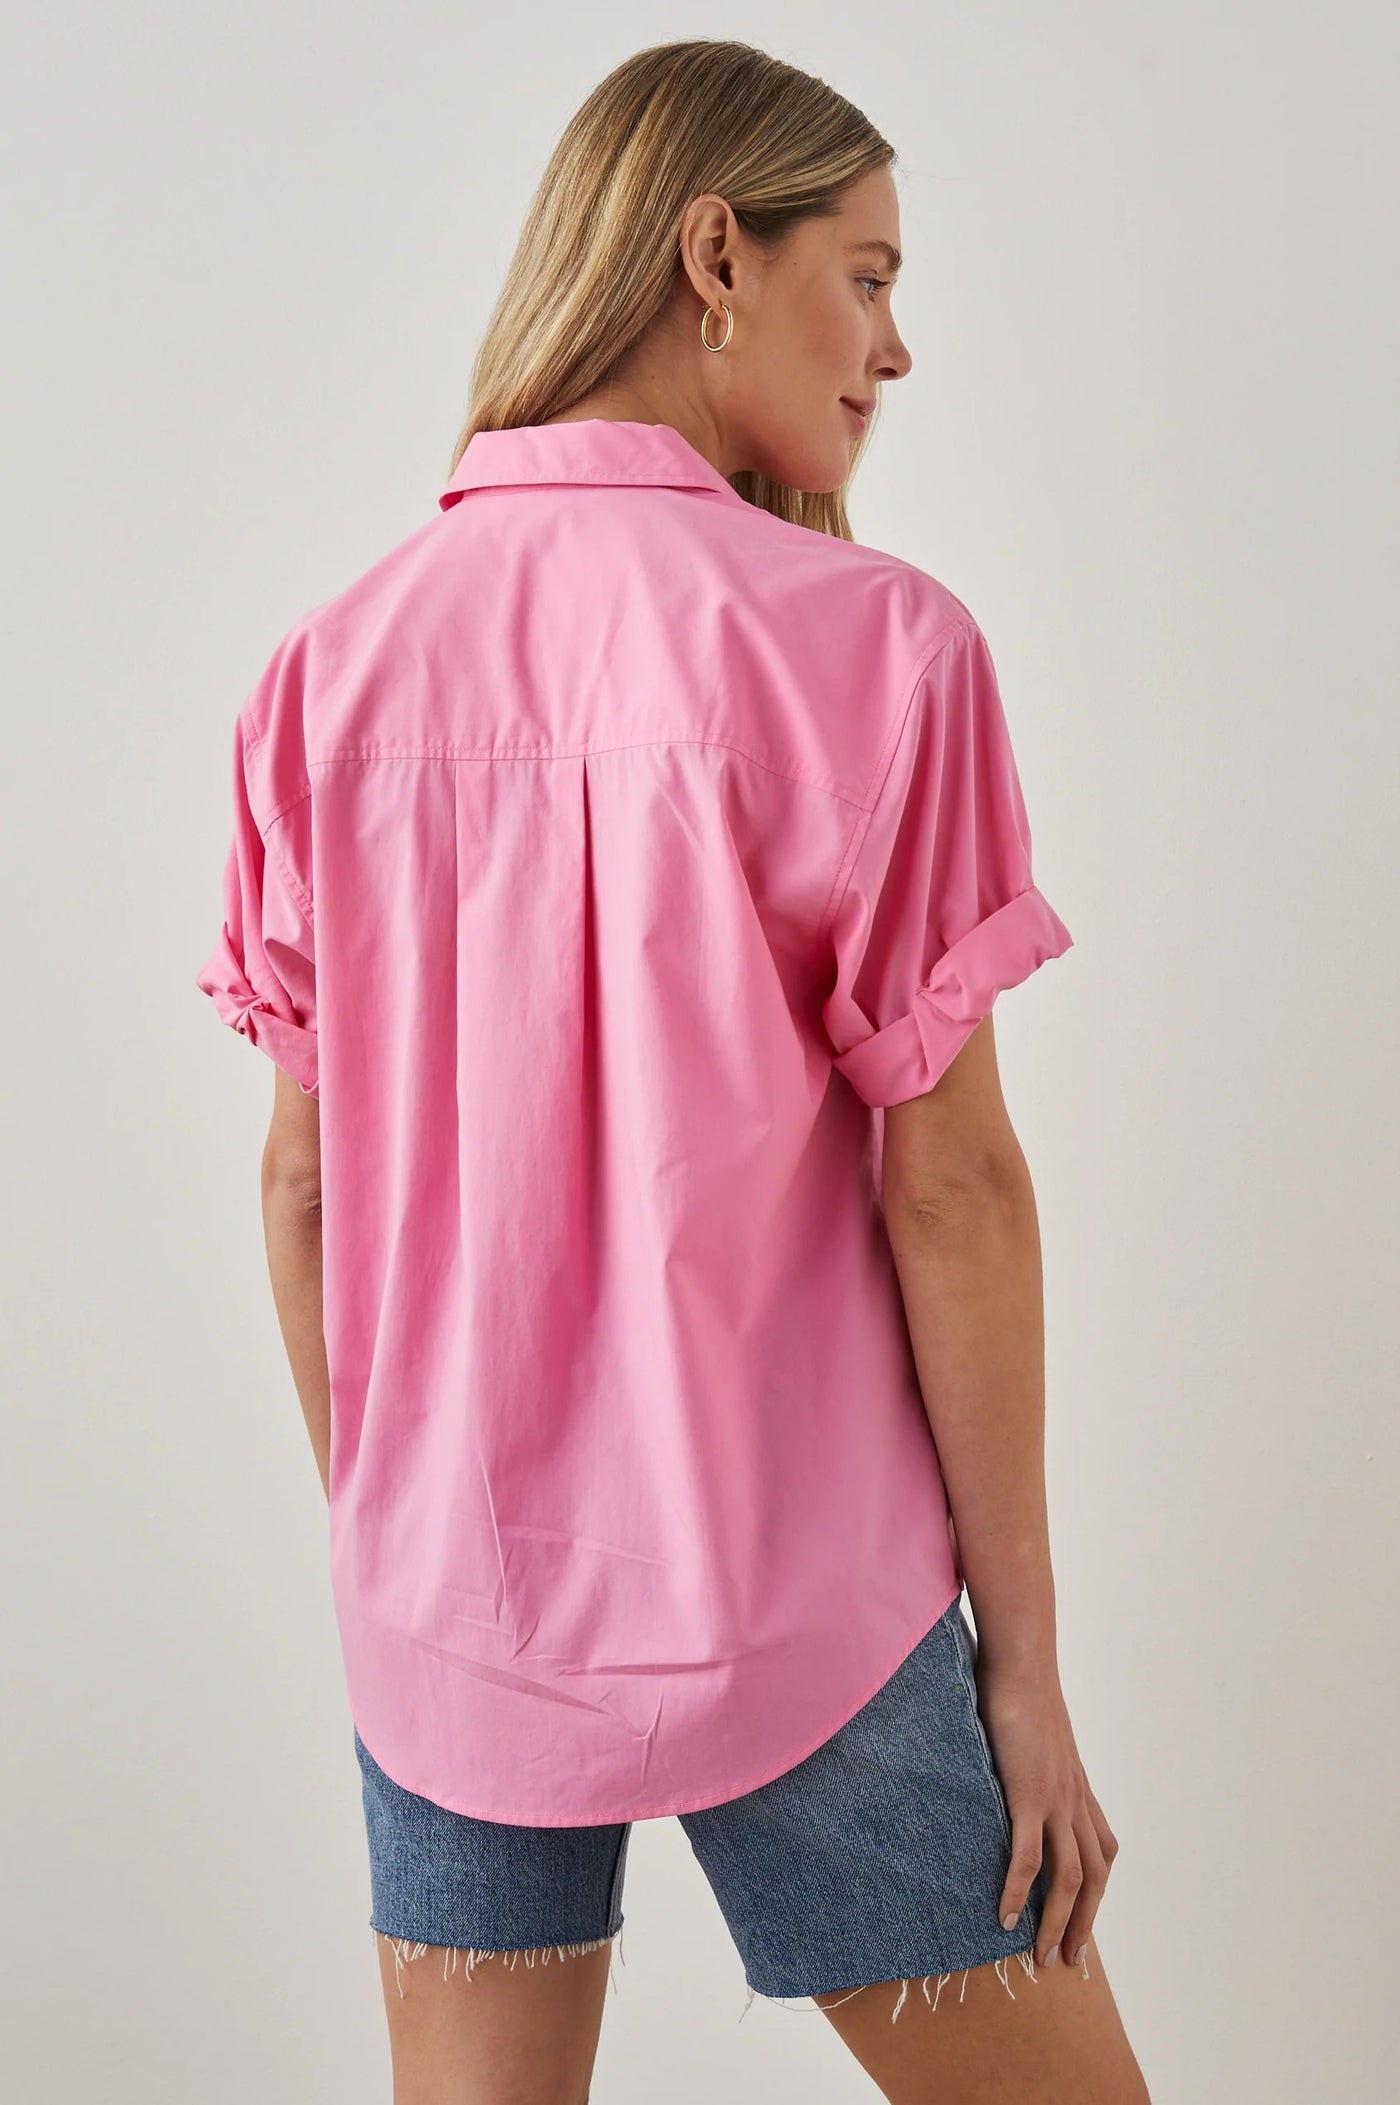 Jojo Shirt in Hot Pink